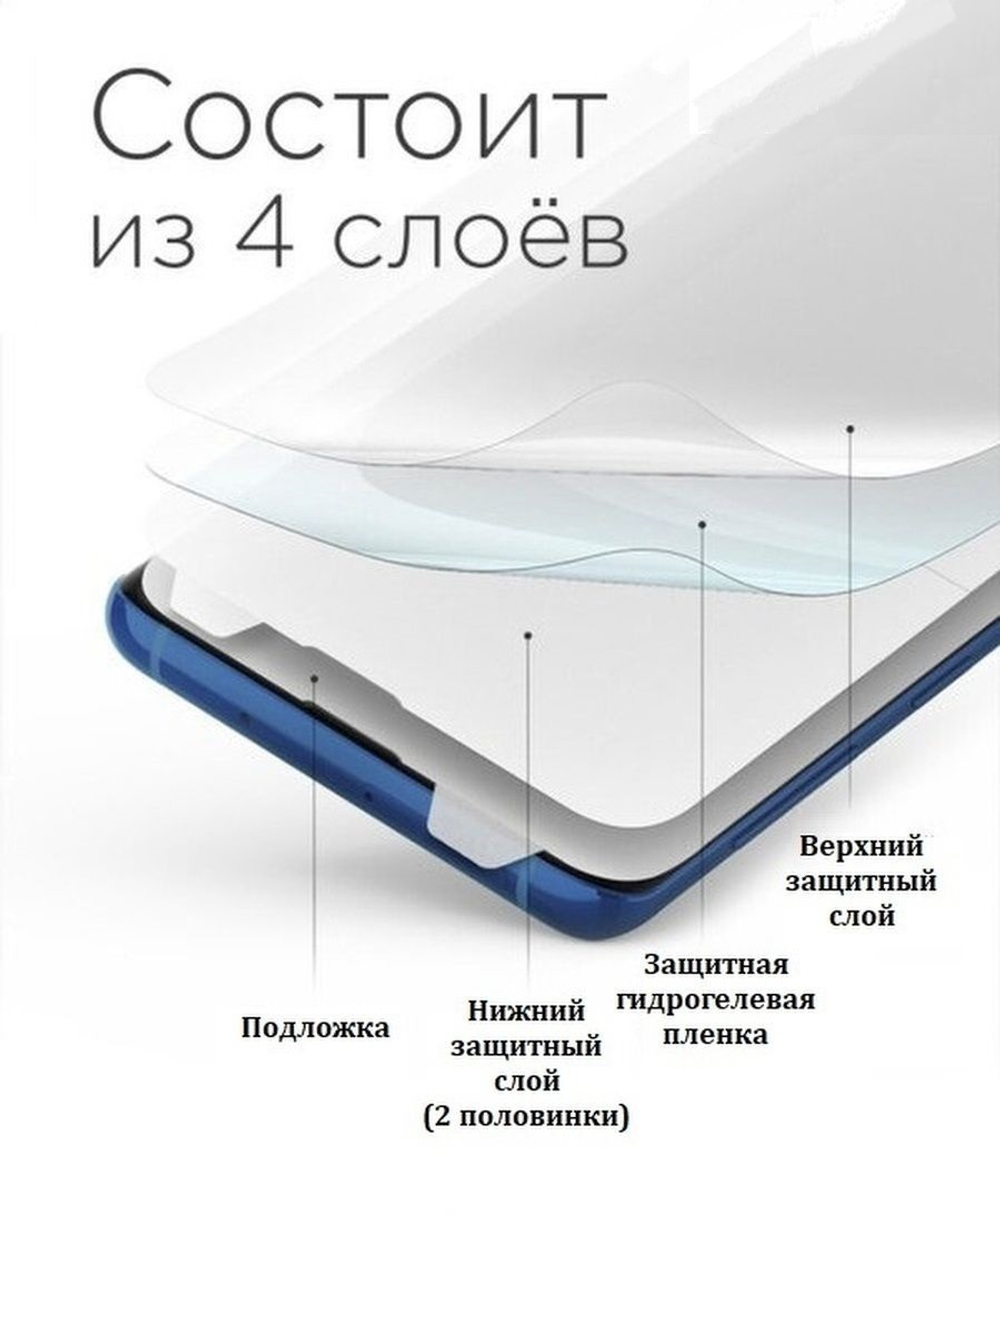 Защитная пленка гидрогелевая для Samsung T211 (Tab 3 7.0 3G) (самовосстанавливающаяся глянцевая)